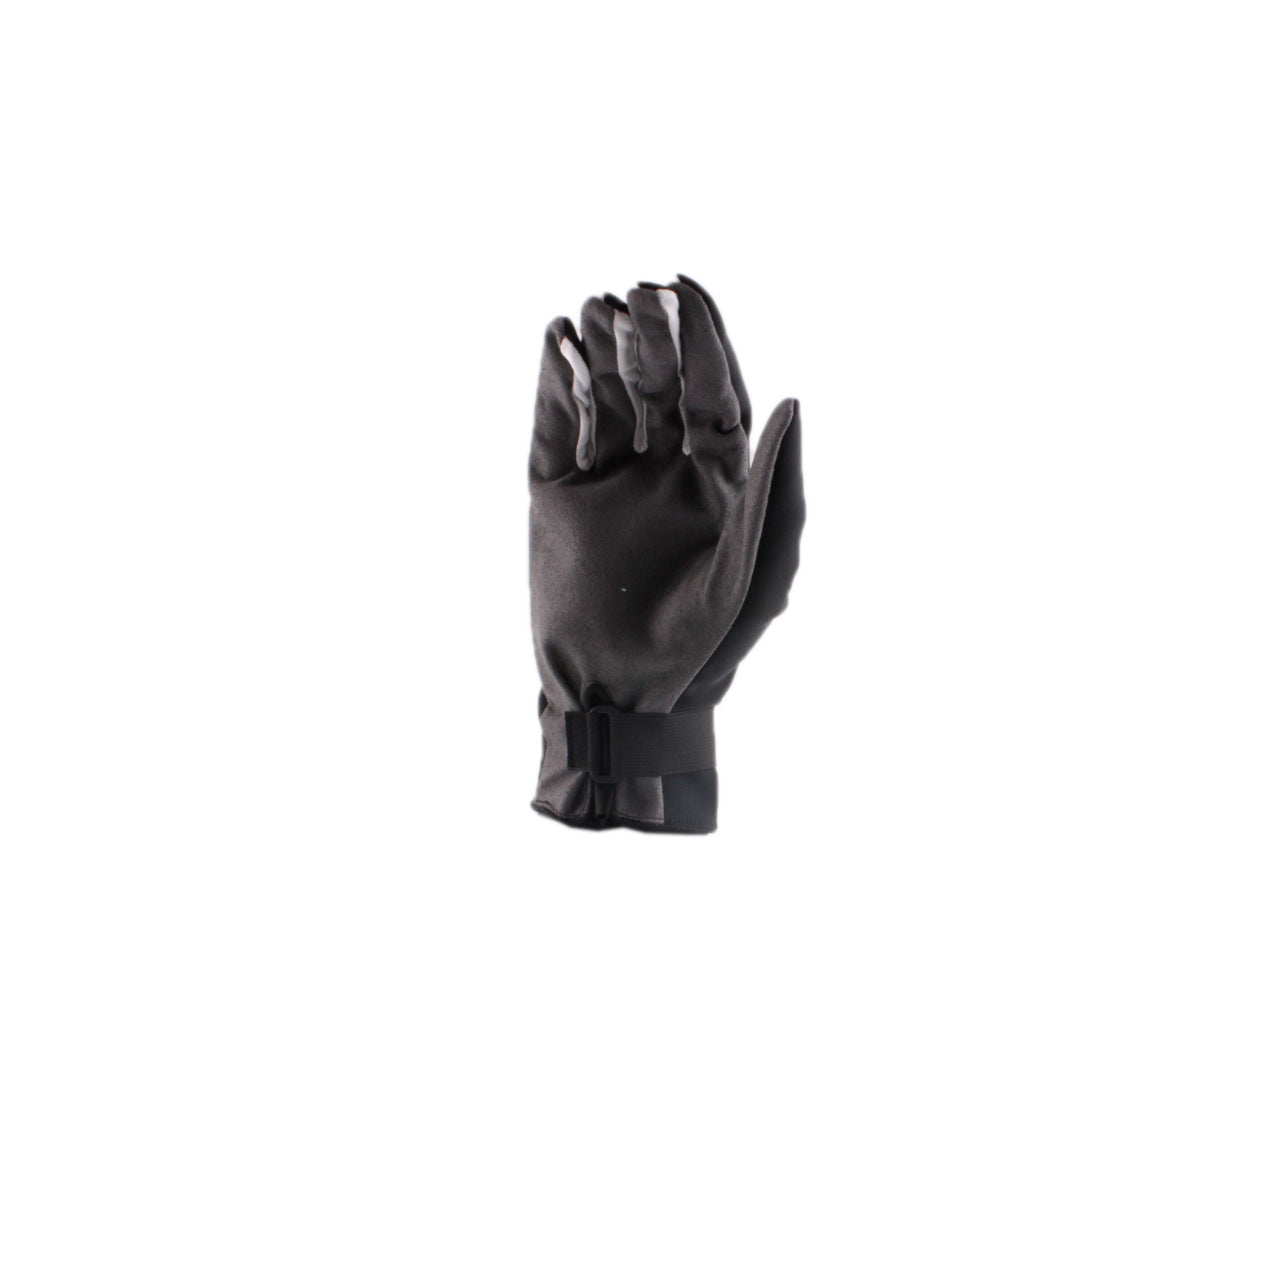 Adidas Cross V13 Handschuhe Glove X-Country Glove Biathlon Alkantara M65420 - Brand Dealers Arena e.K. - BDA24